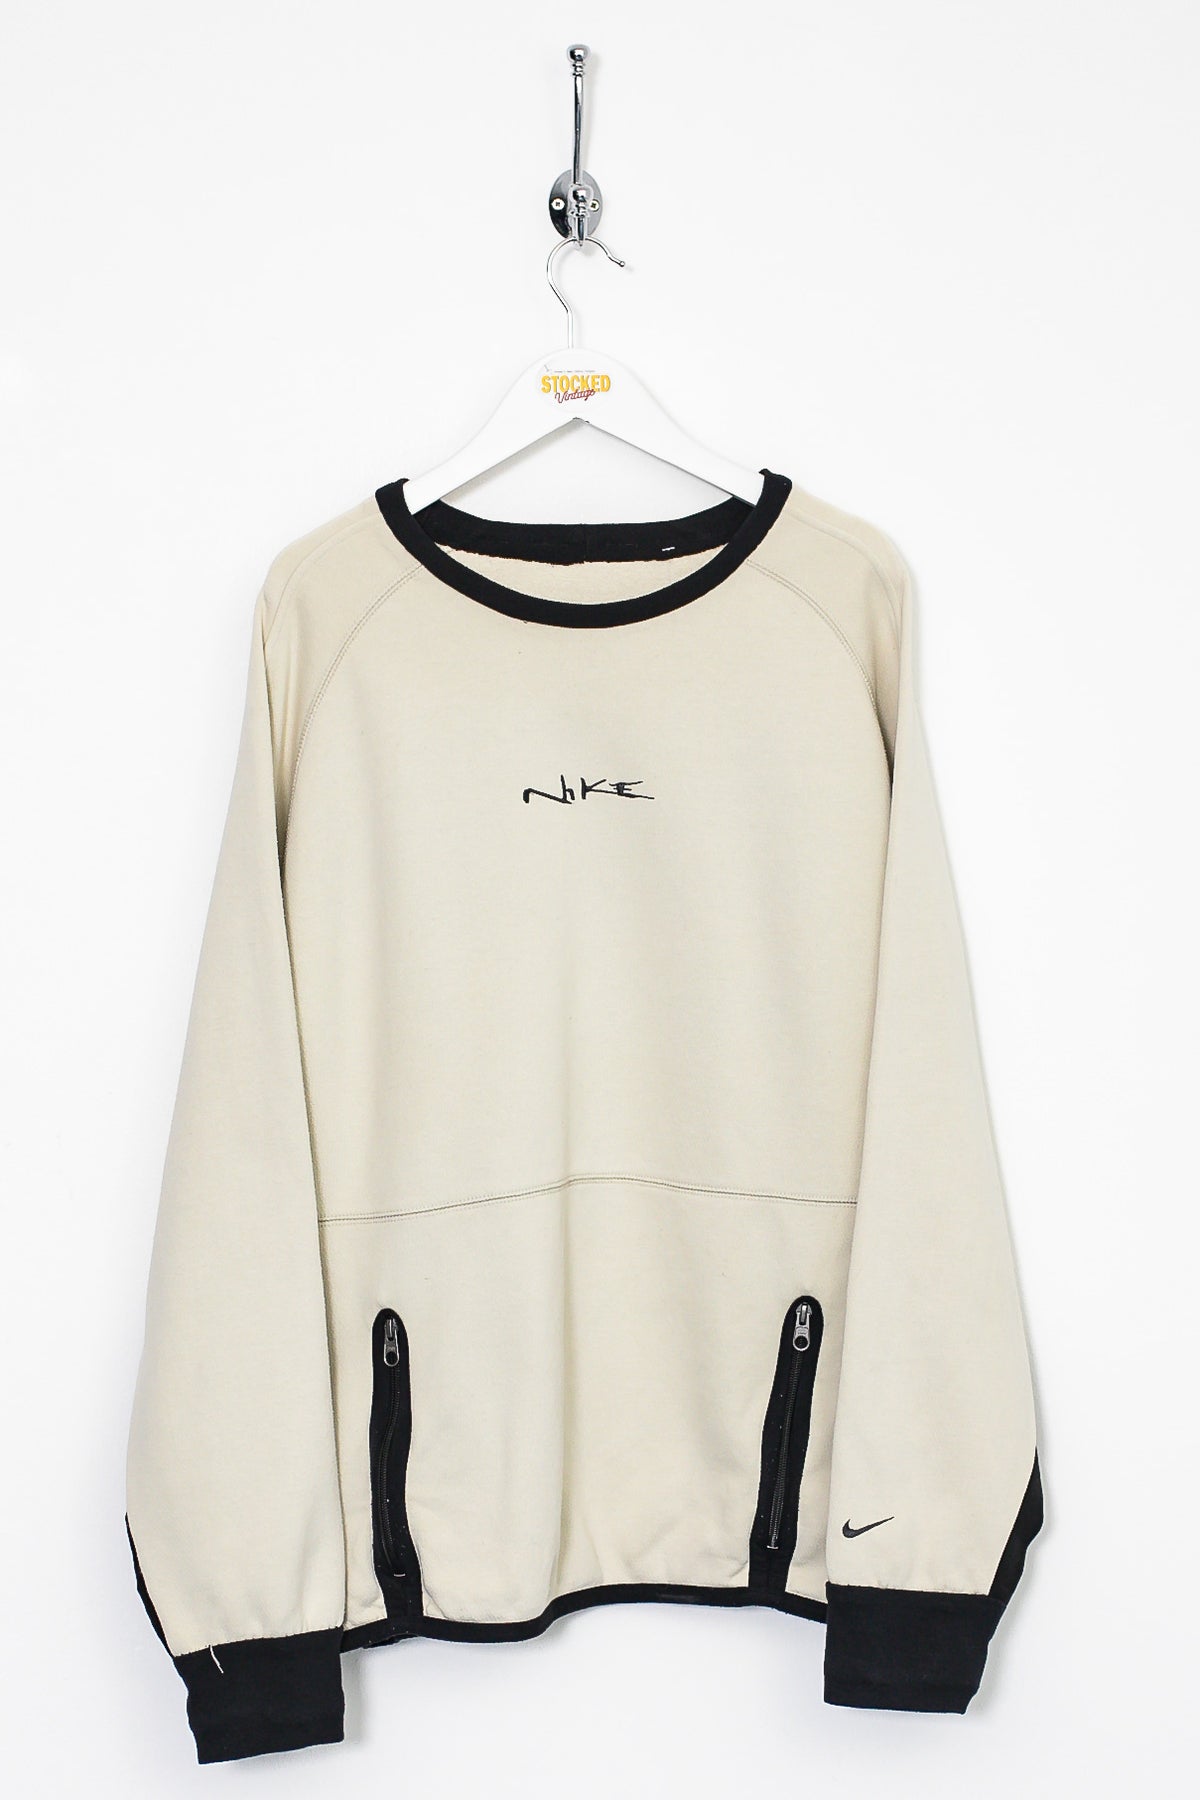 00s Nike Sweatshirt (L)